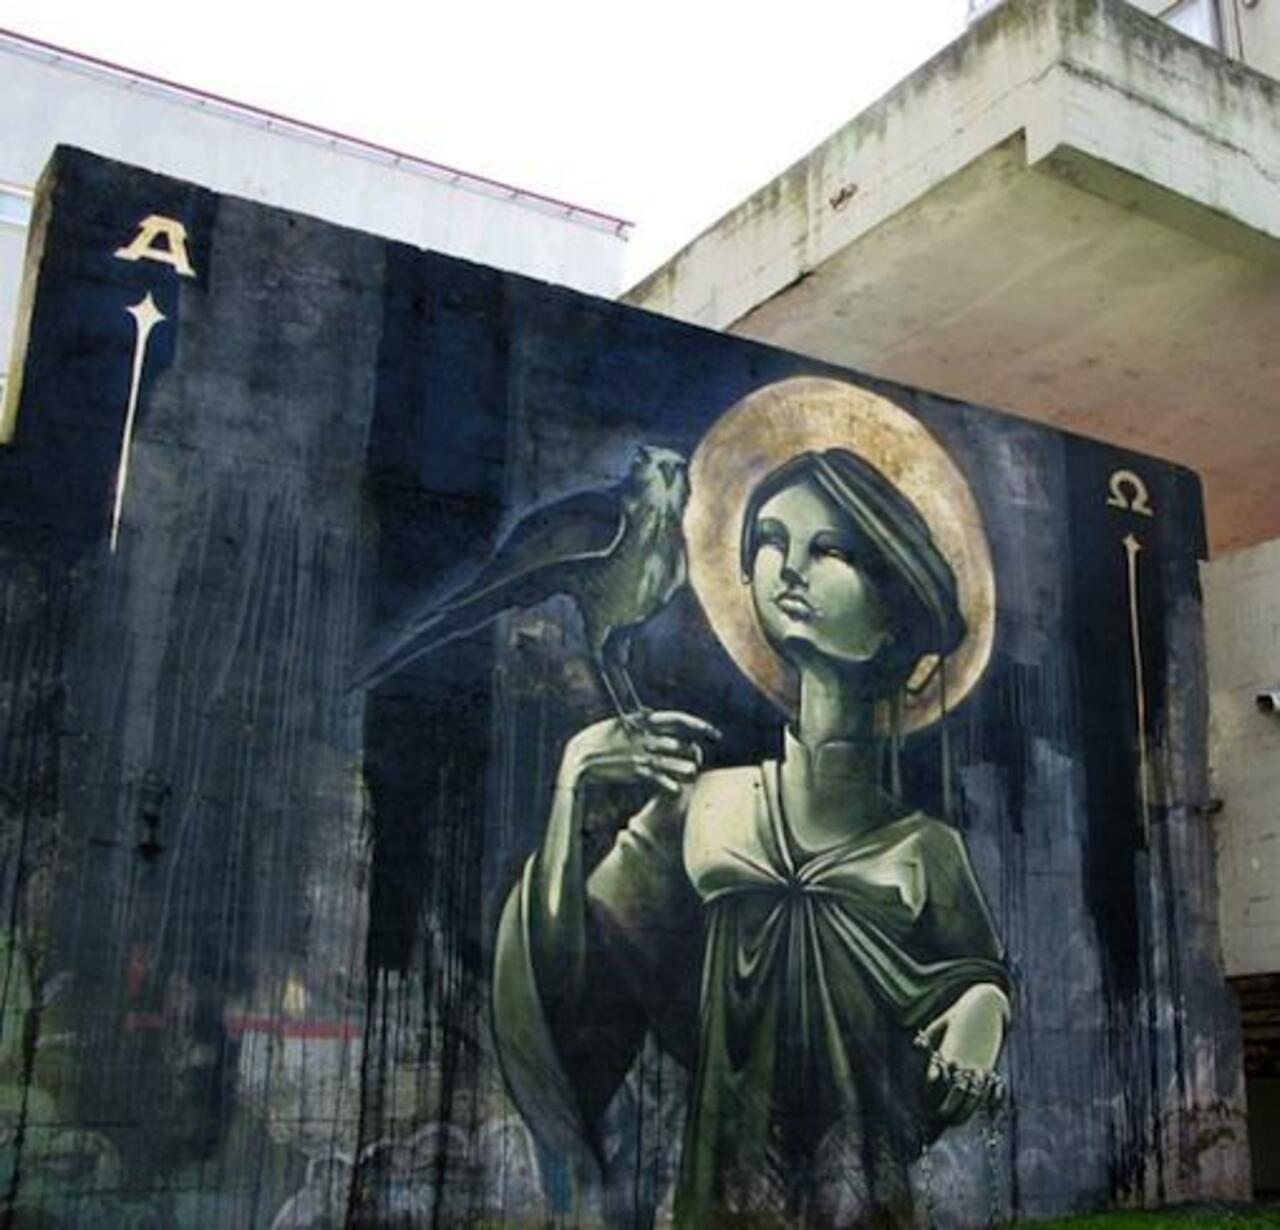 #art #streetart #graffiti 
#Faith47 http://t.co/G9pBuz6fBI